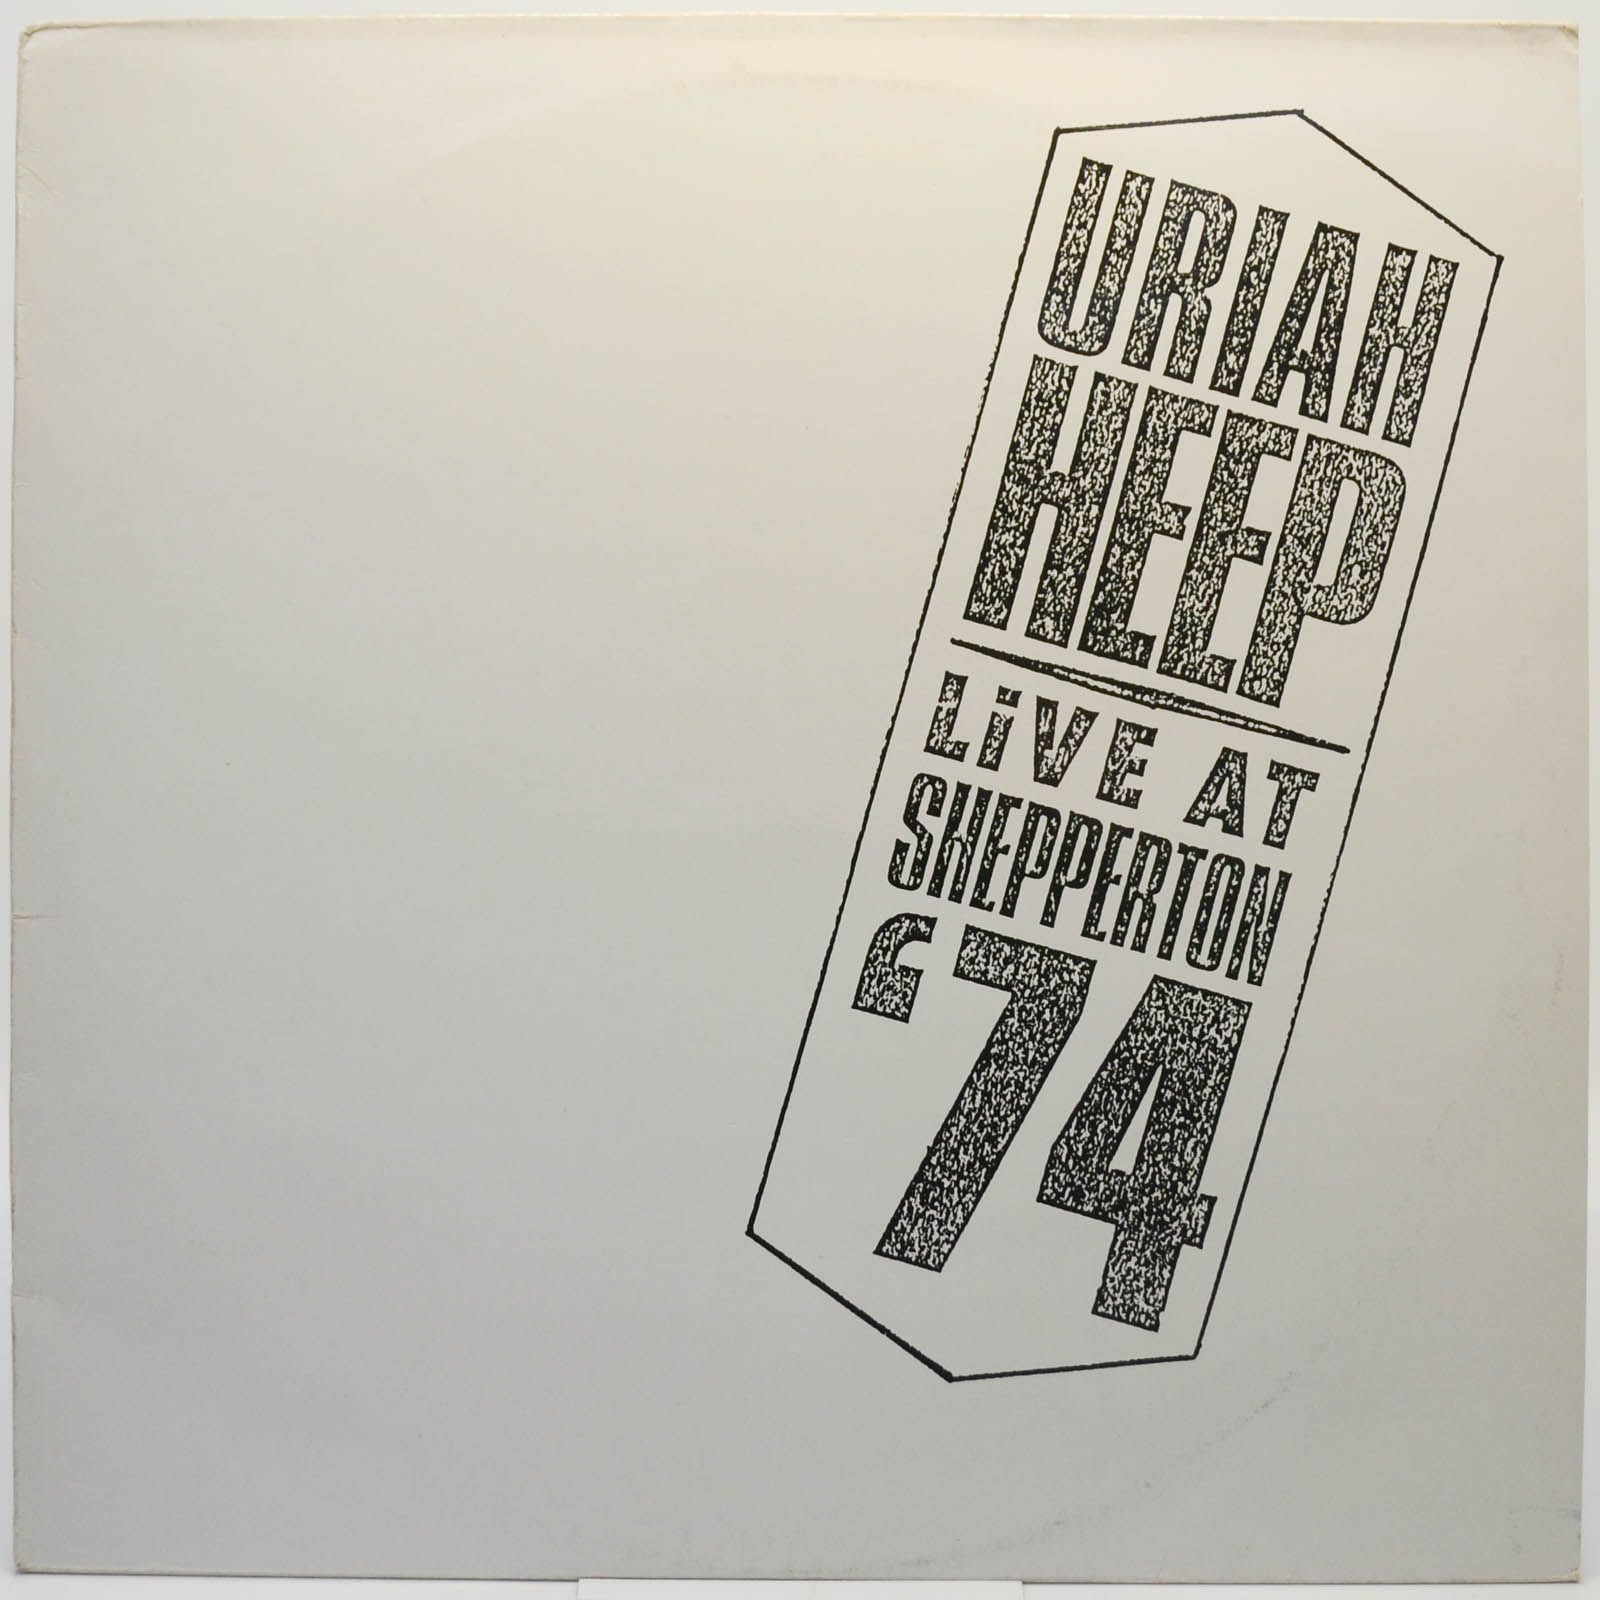 Uriah Heep — Live At Shepperton '74 (UK), 1986